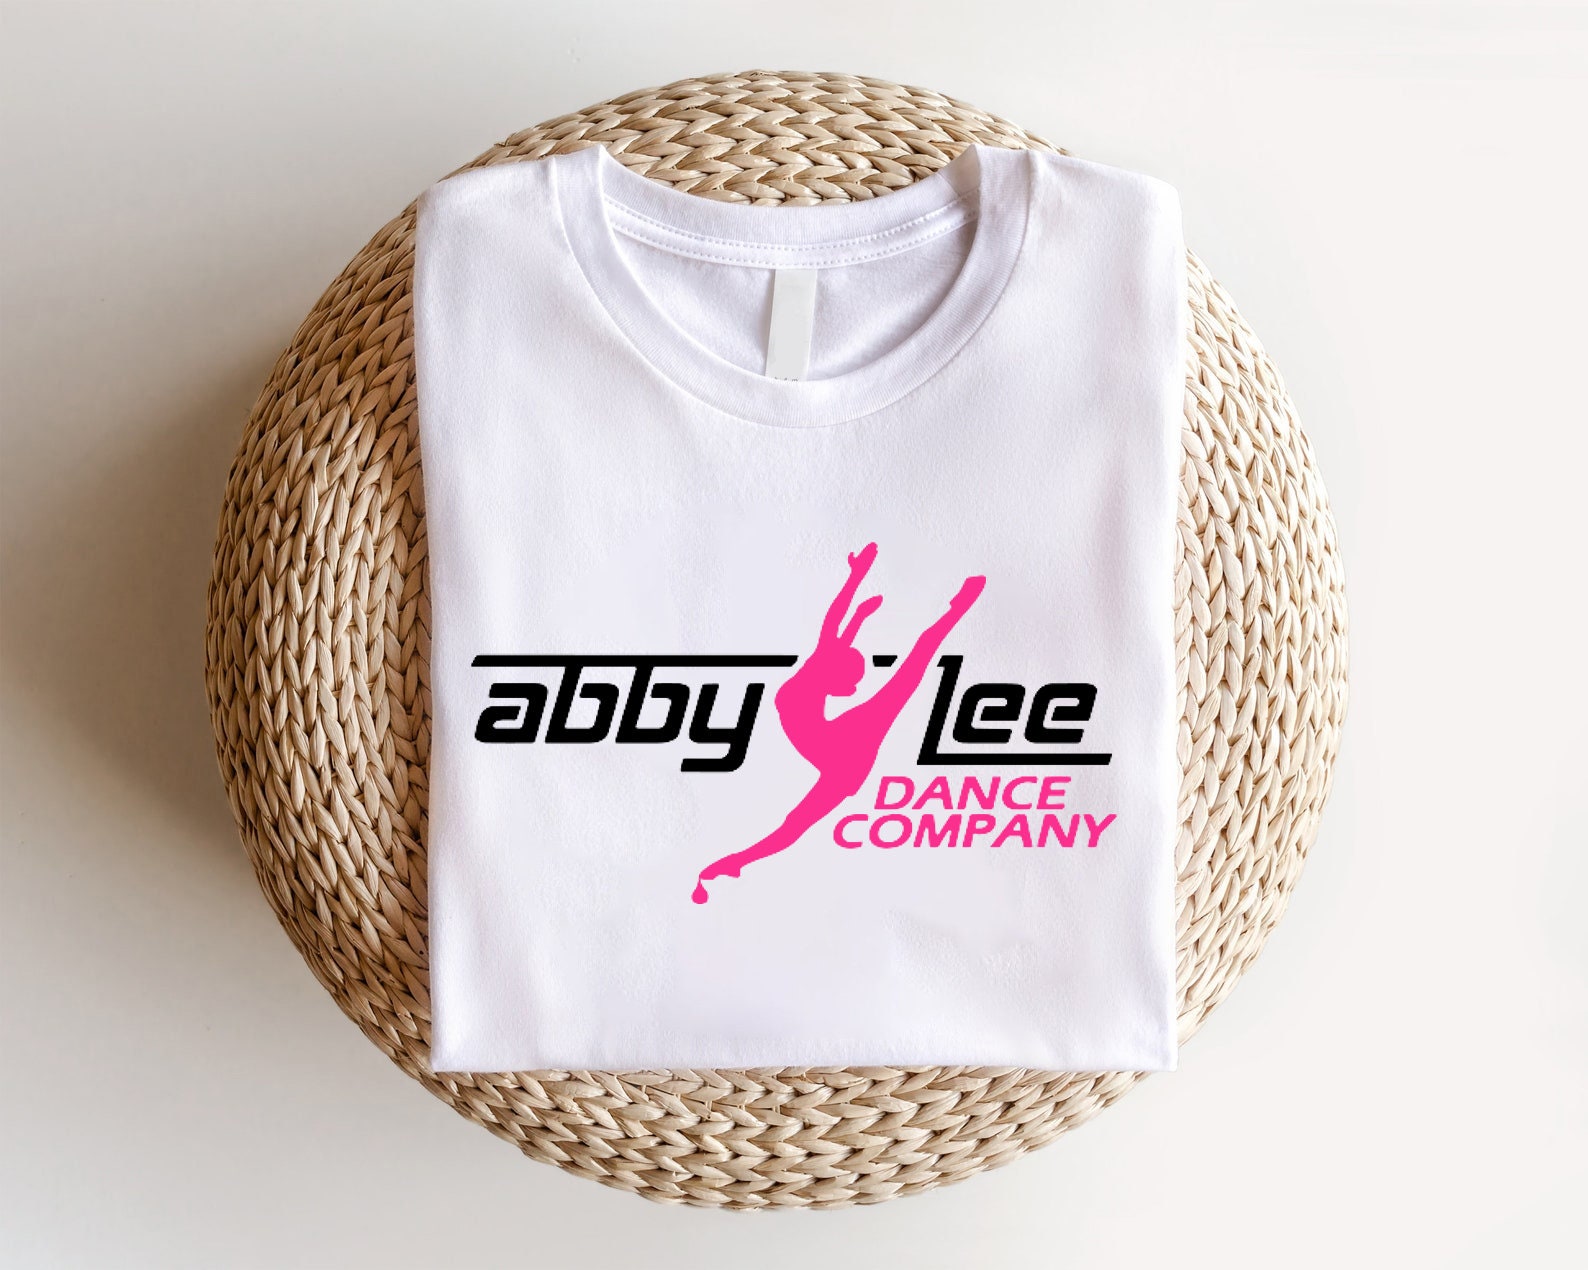 Abby Lee Dance Company Shirt Abby Lee Dance Company Aldc the 